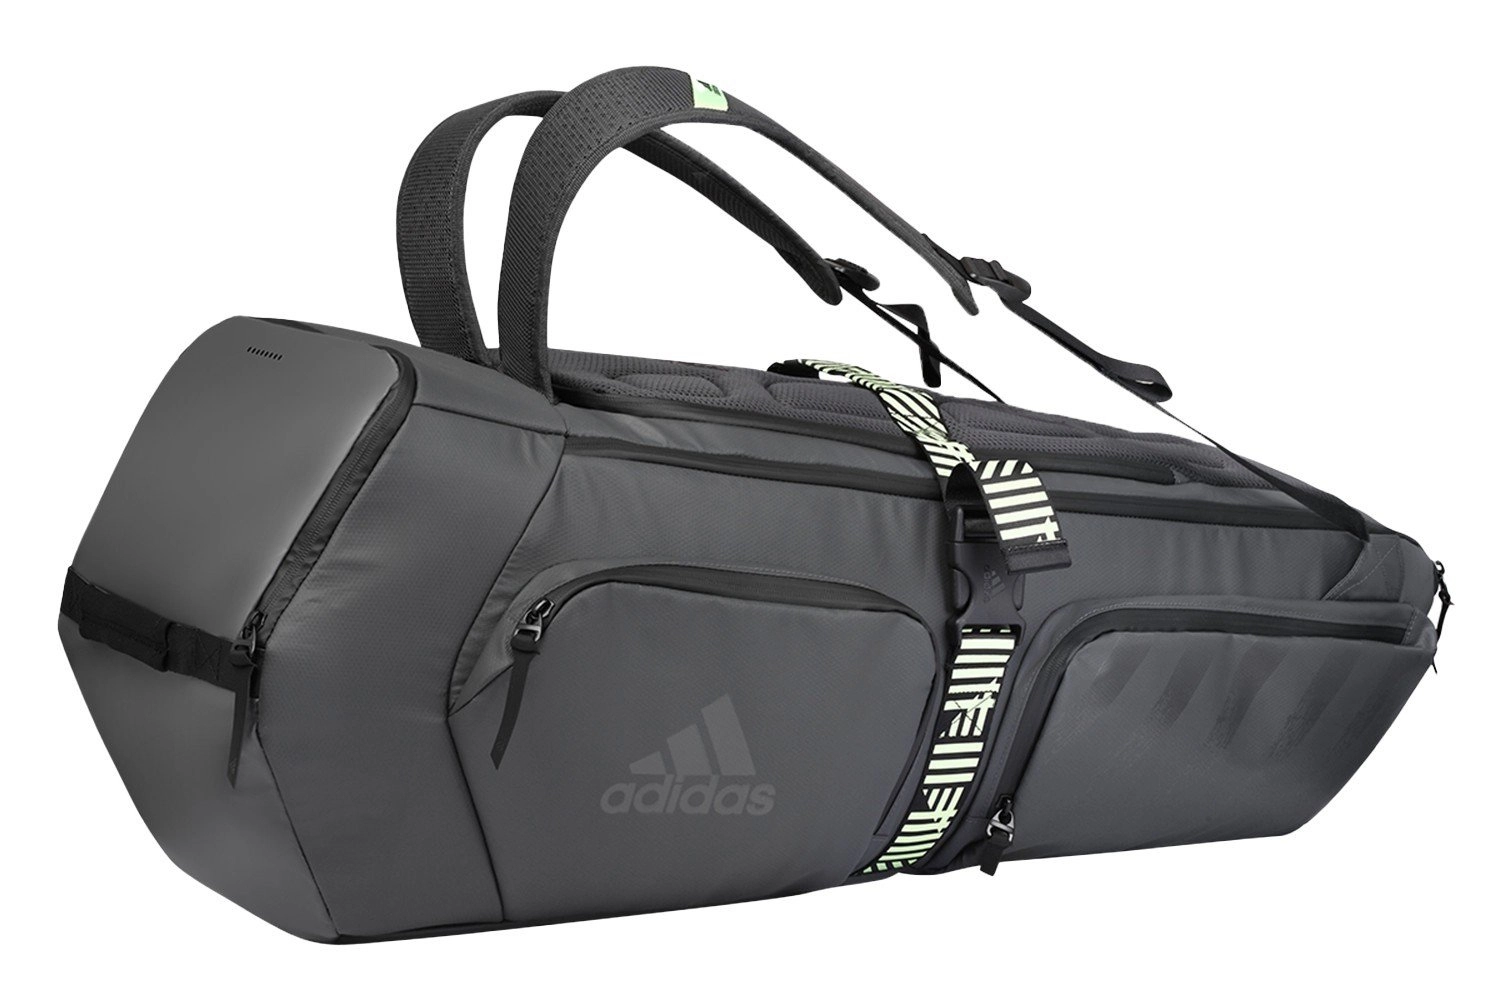 Adidas Tennis Bags Barricade Tour II 3 Pack - YouTube